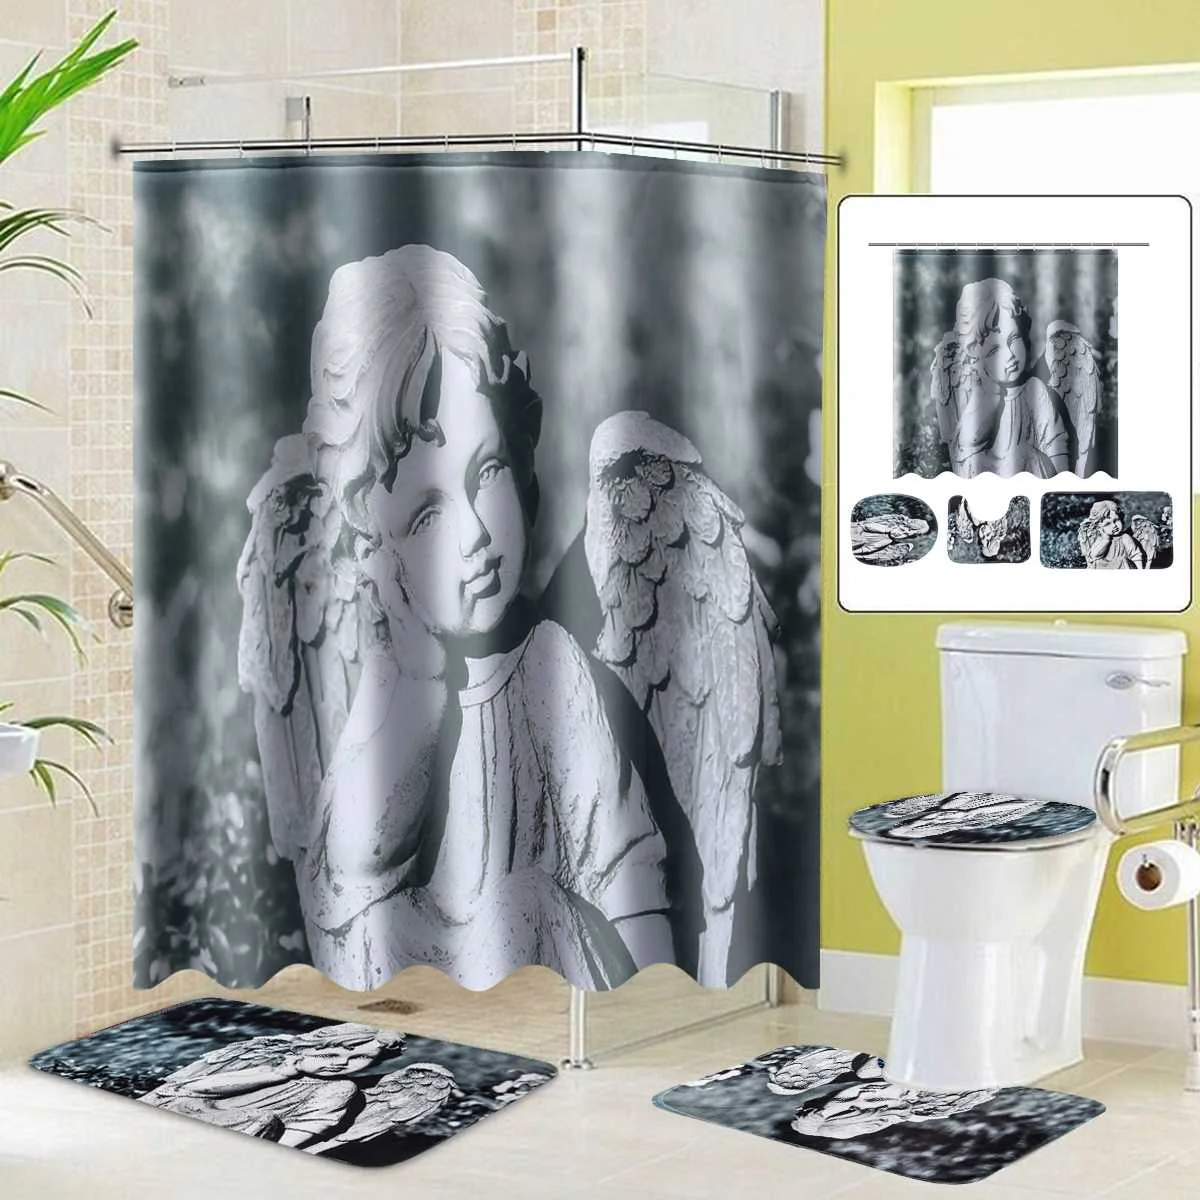 4 Pcs Home Bathroom Bath Mat Set Anti Slip Rugs Toilet Lid Cover Shower Curtain 